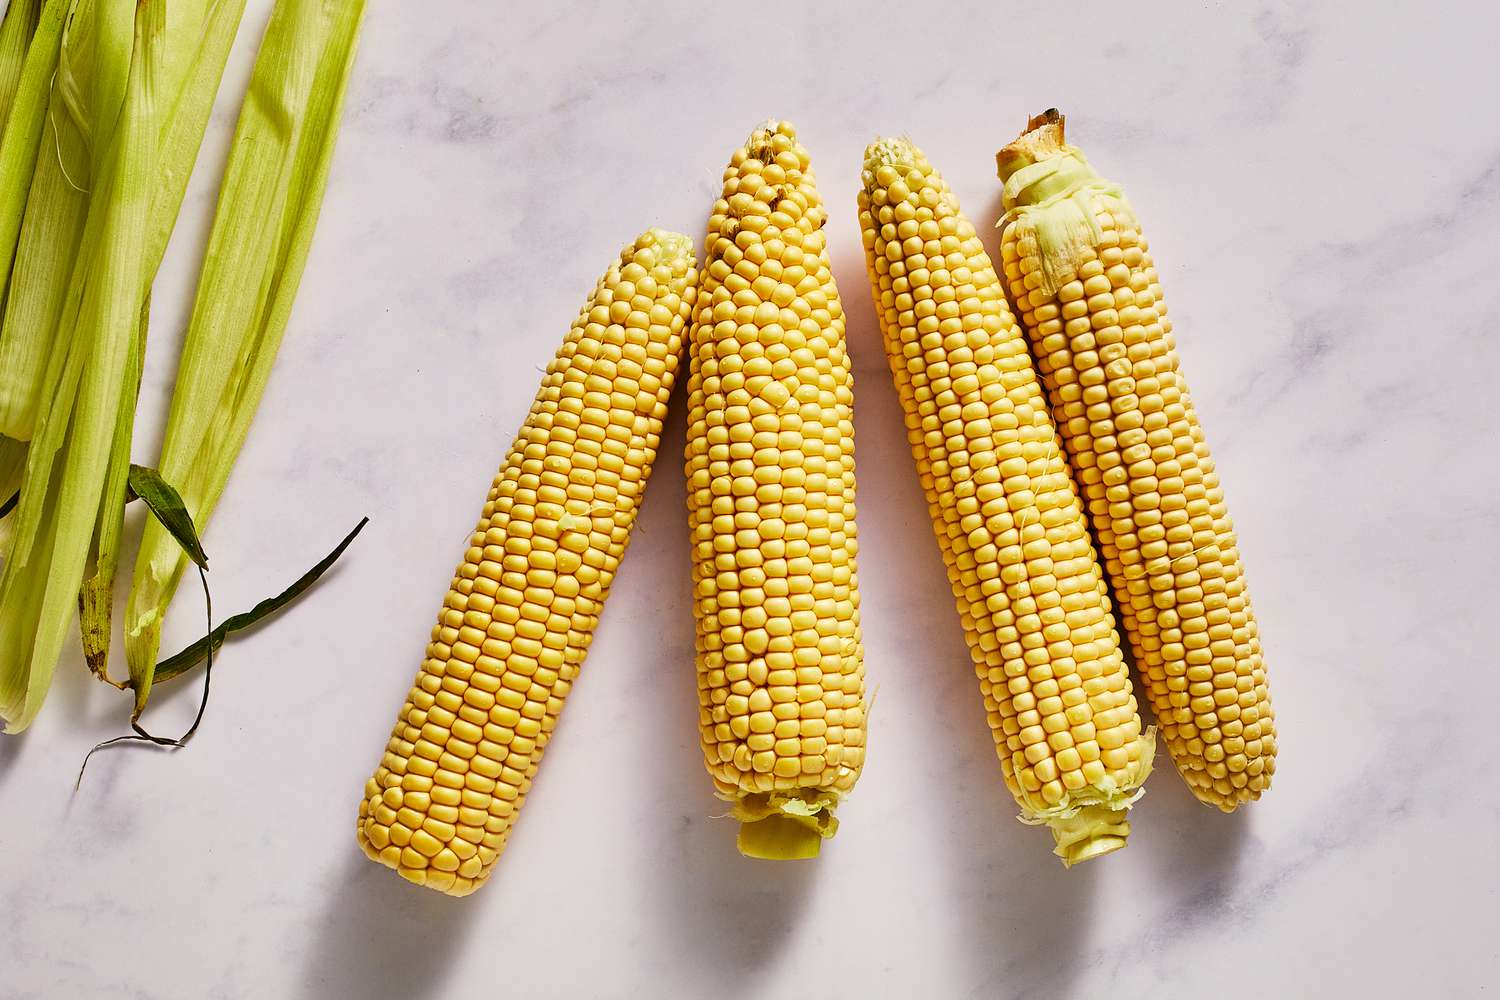 Four shucked ears of corn